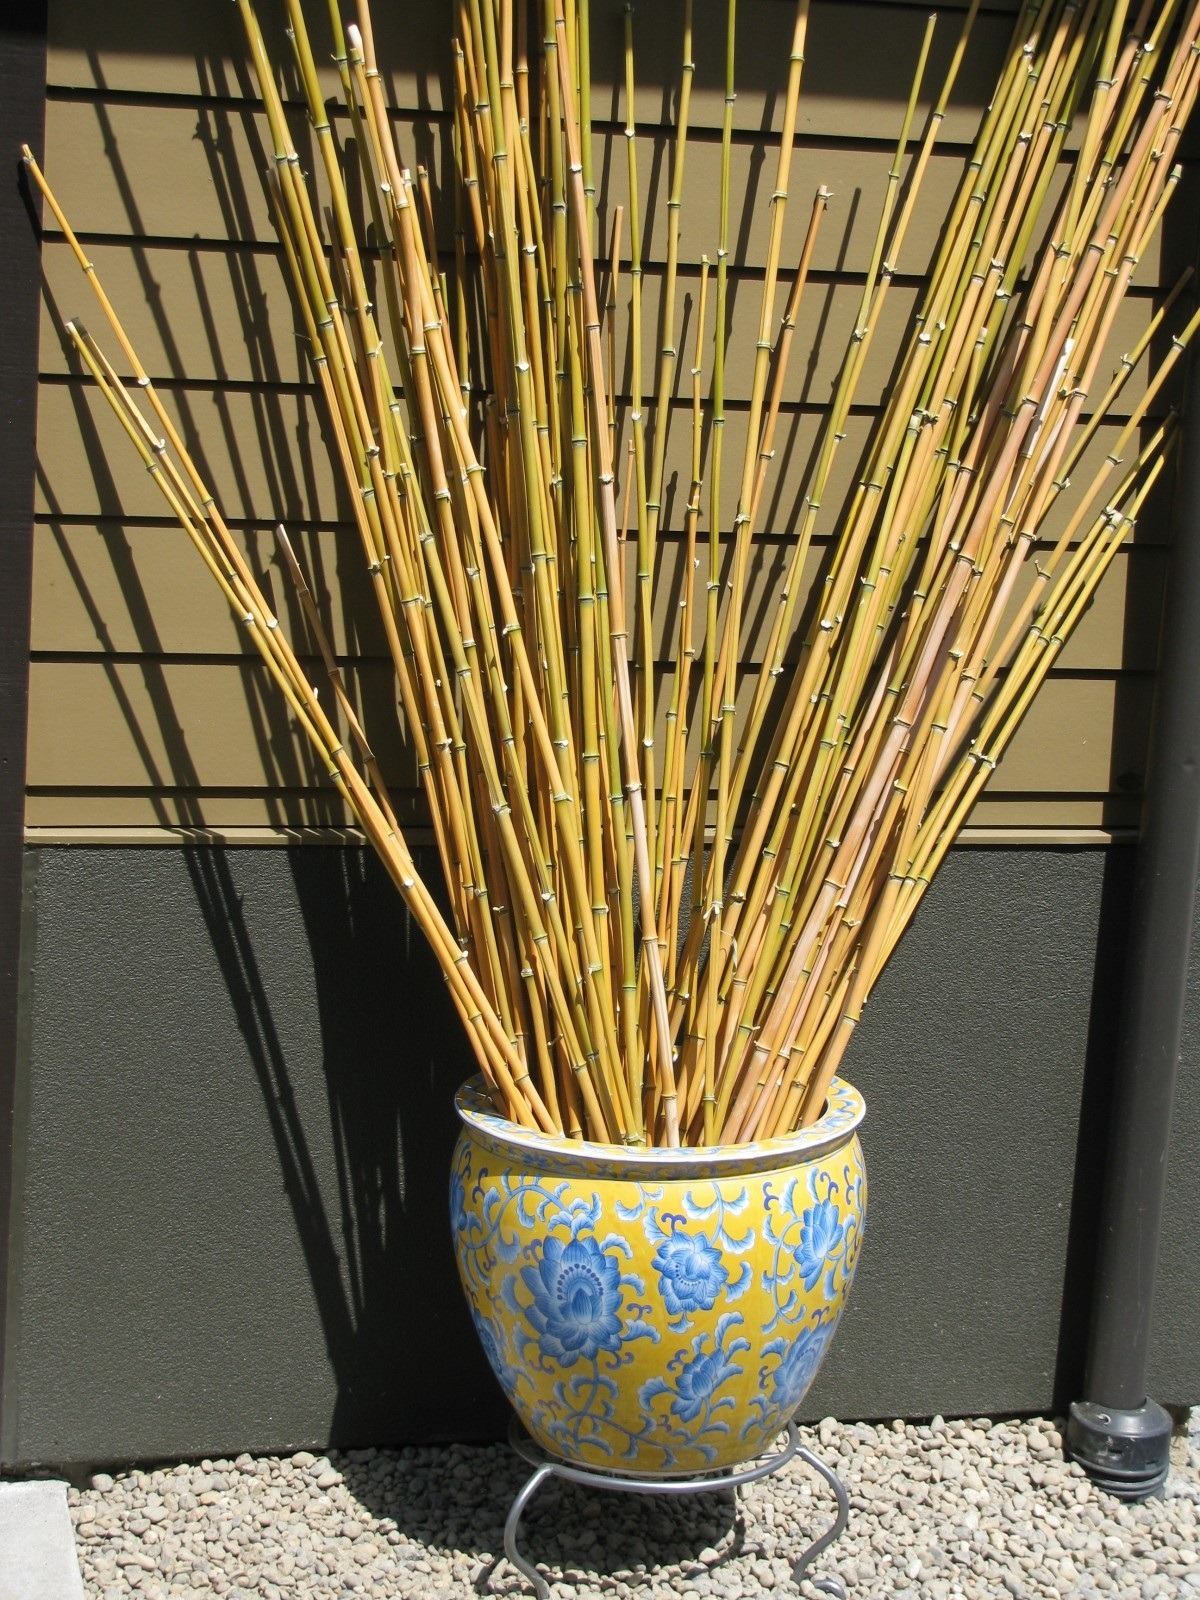 Bamboo Shoots on Vase